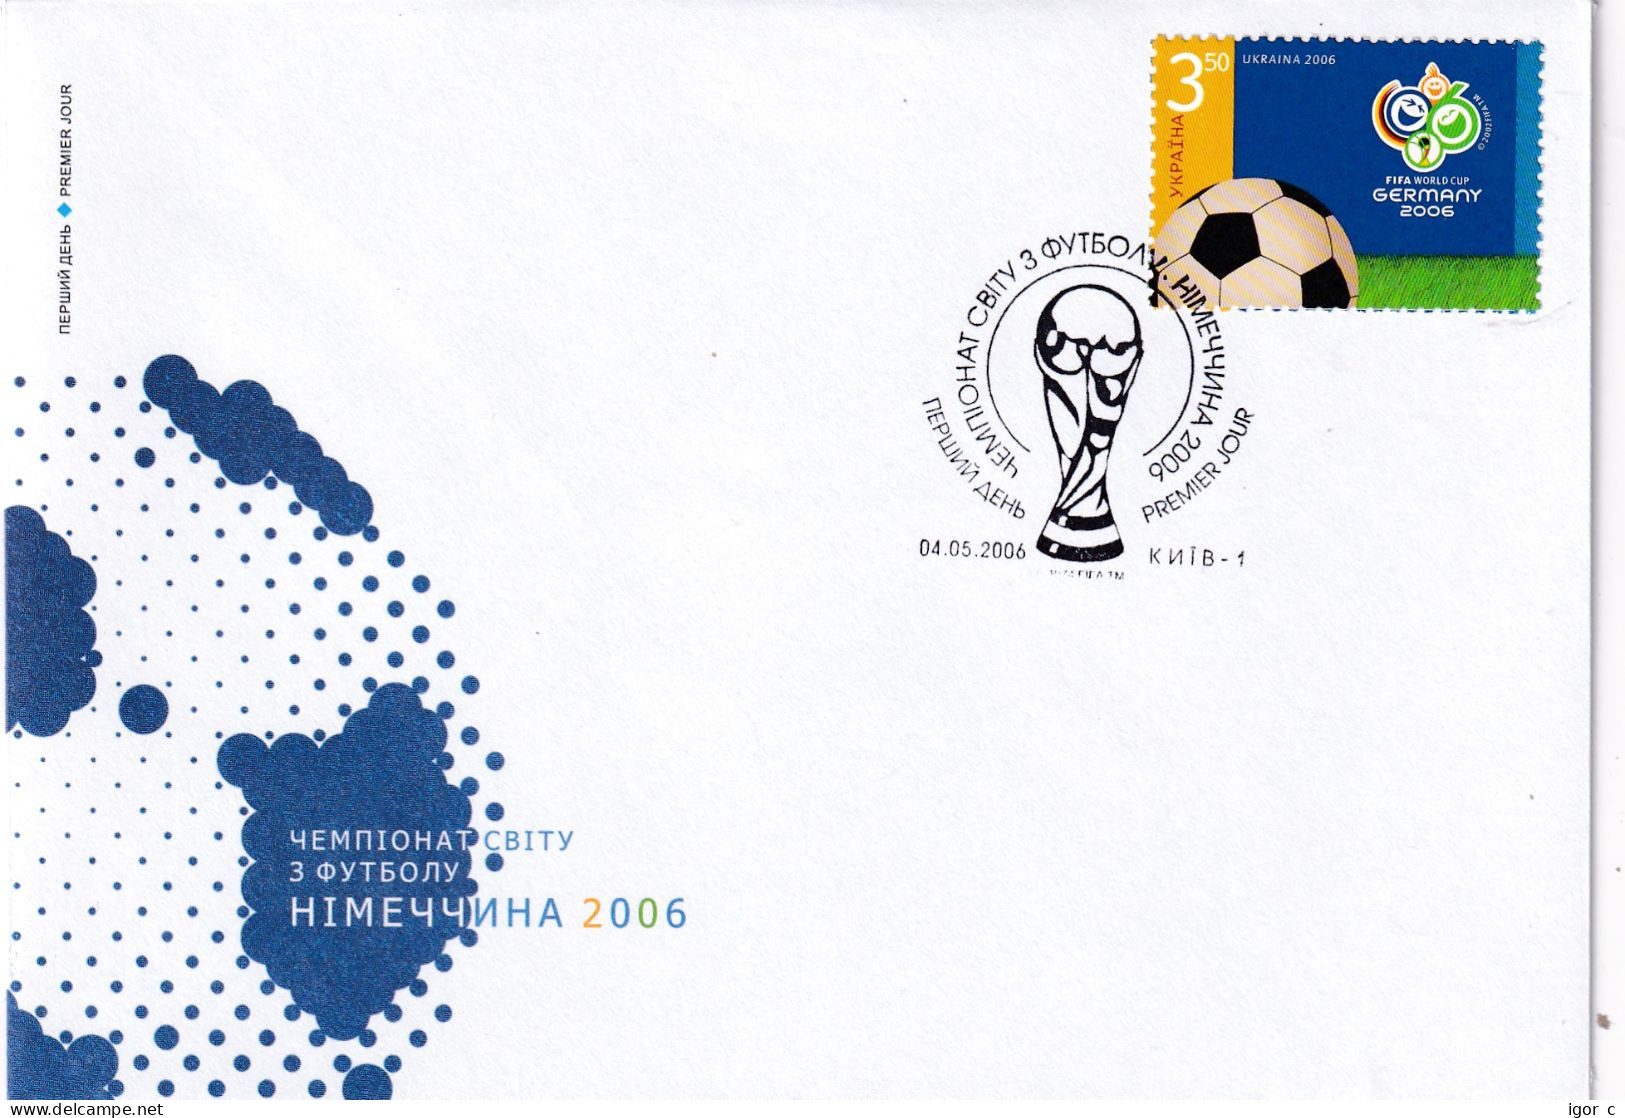 Ukraine 2006 Cover: Football Fussball Soccer Calcio; FIFA World Cup Germany - 2006 – Germany